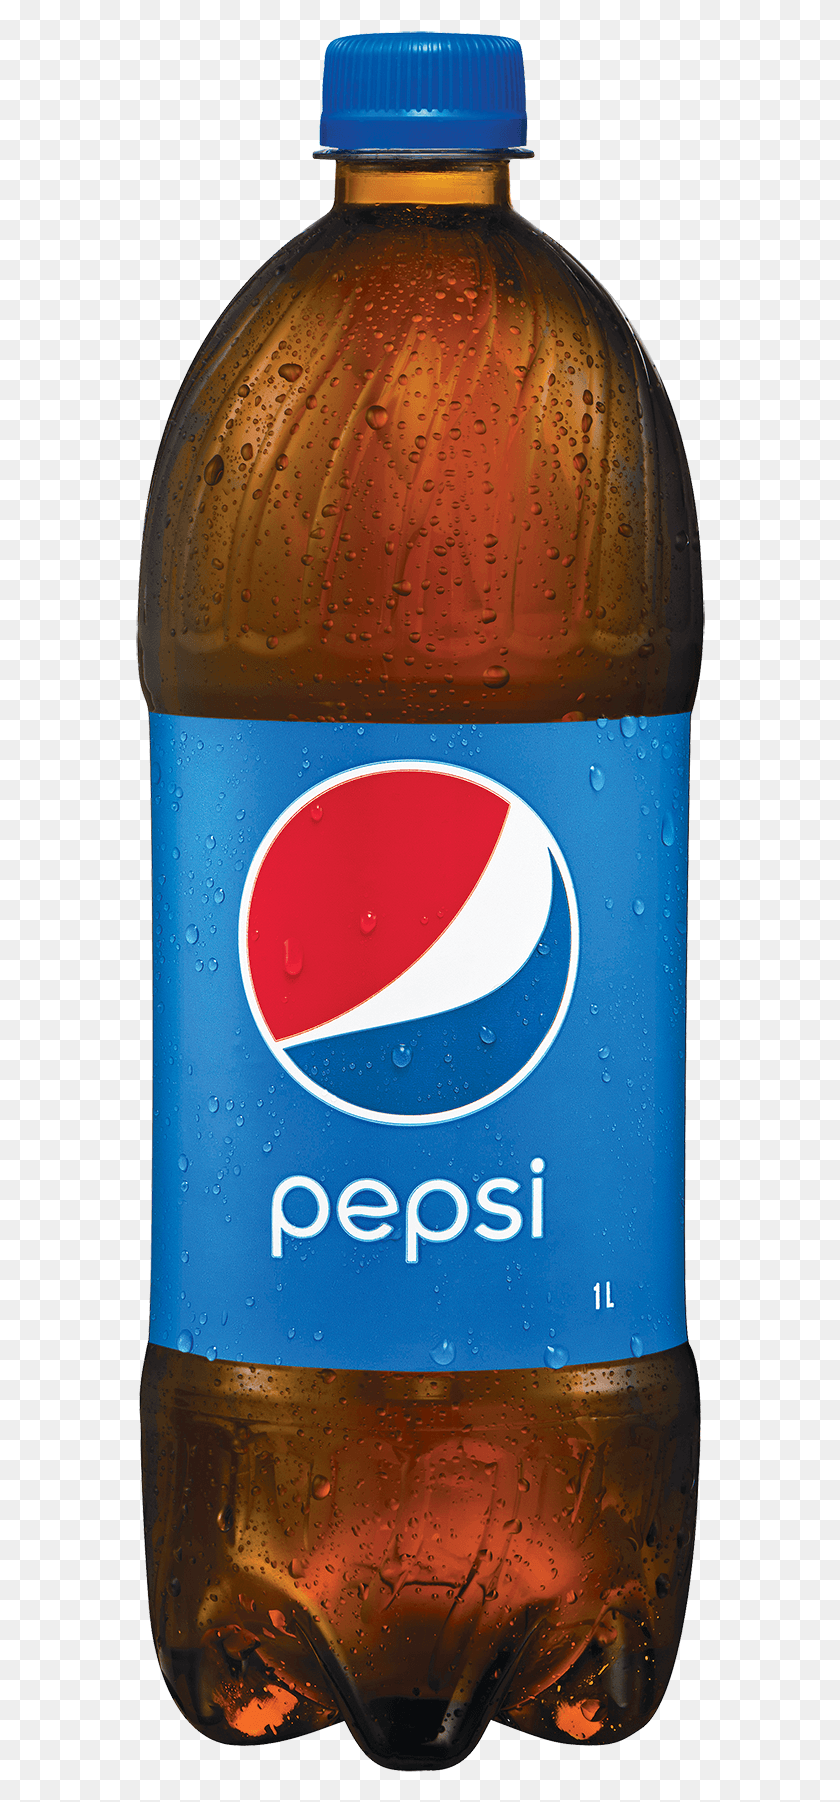 570x1742 Газированная Вода Max Fizzy Water Pepsi Logo Drinks Image Crush Cream Soda Pepsi, Напиток, Напиток, Пиво Hd Png Скачать